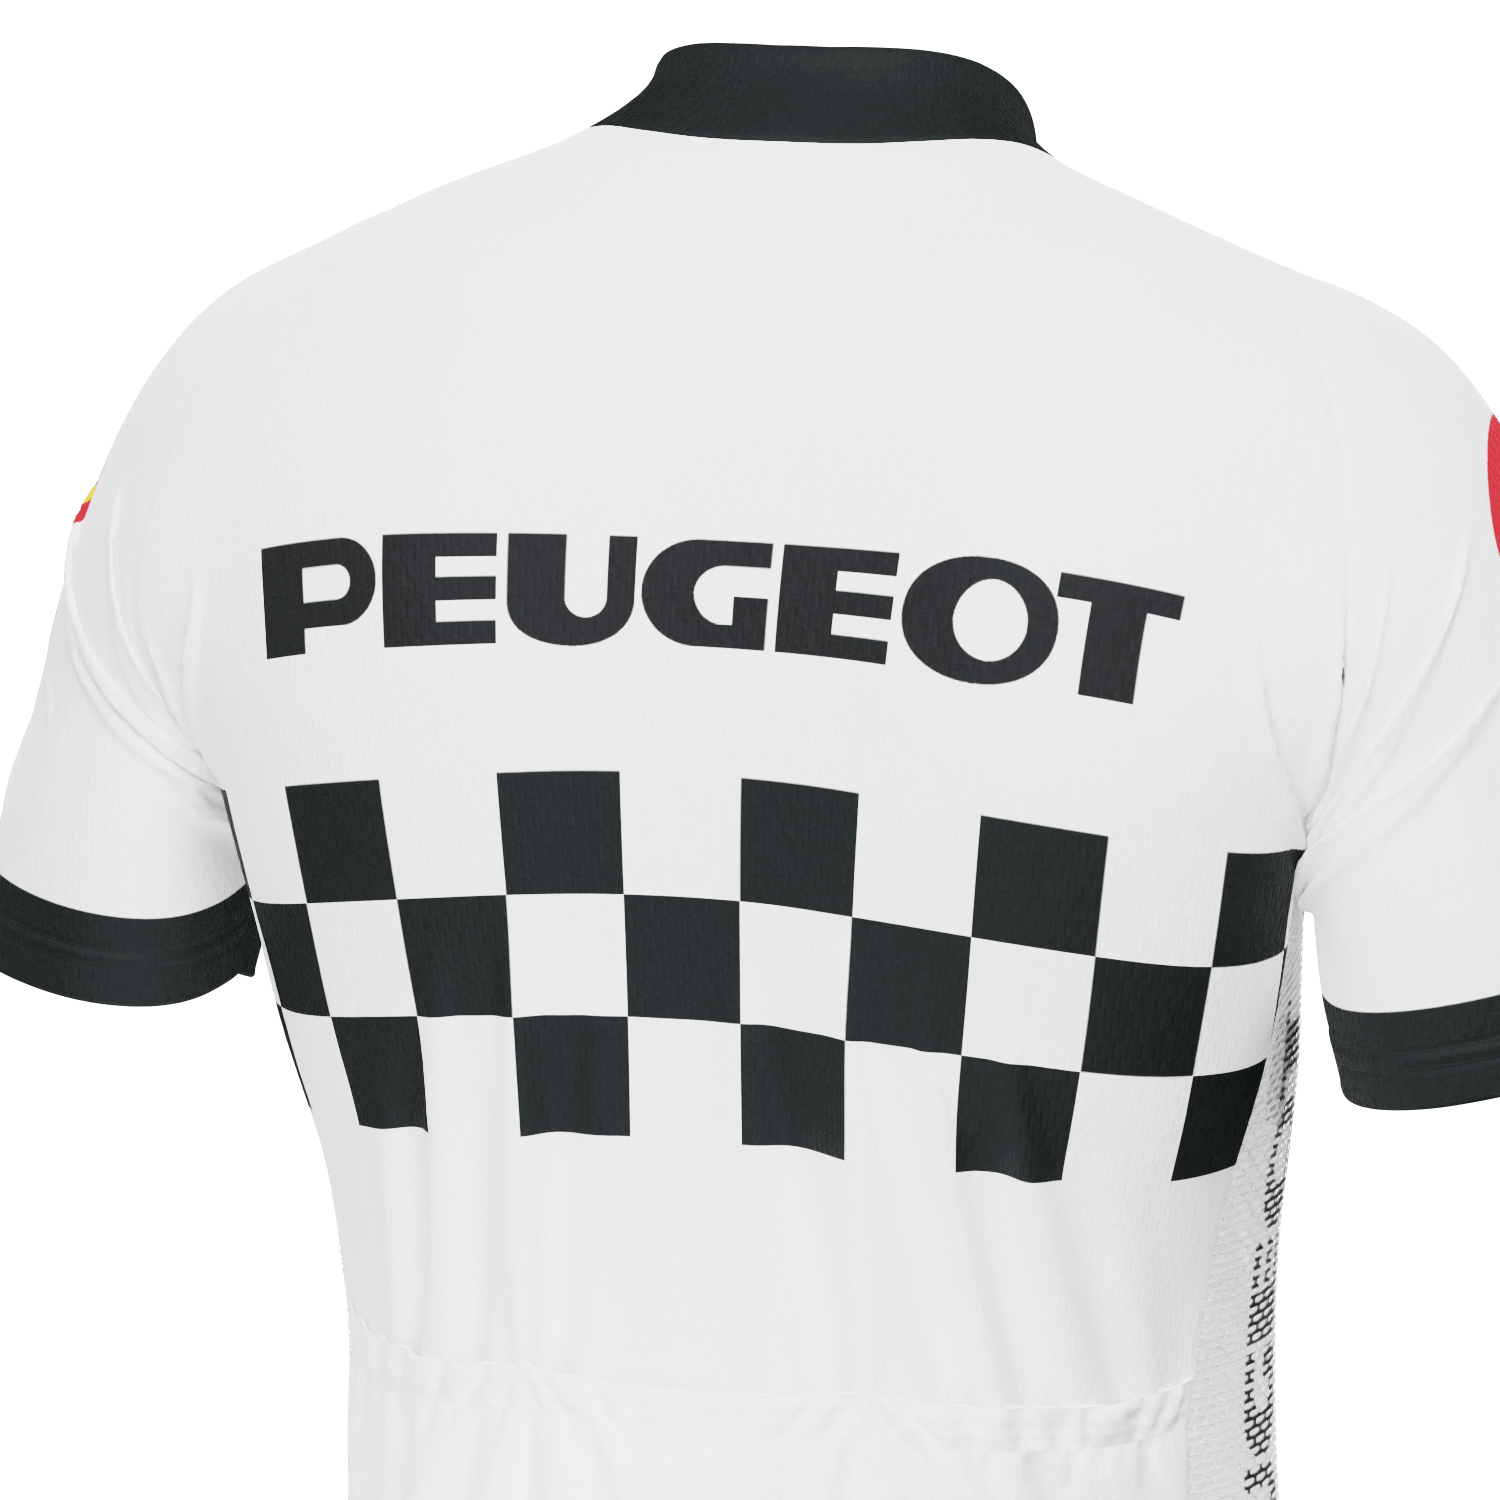 Men's Peugeot Shell Retro 1983 Short Sleeve Cycling Kit